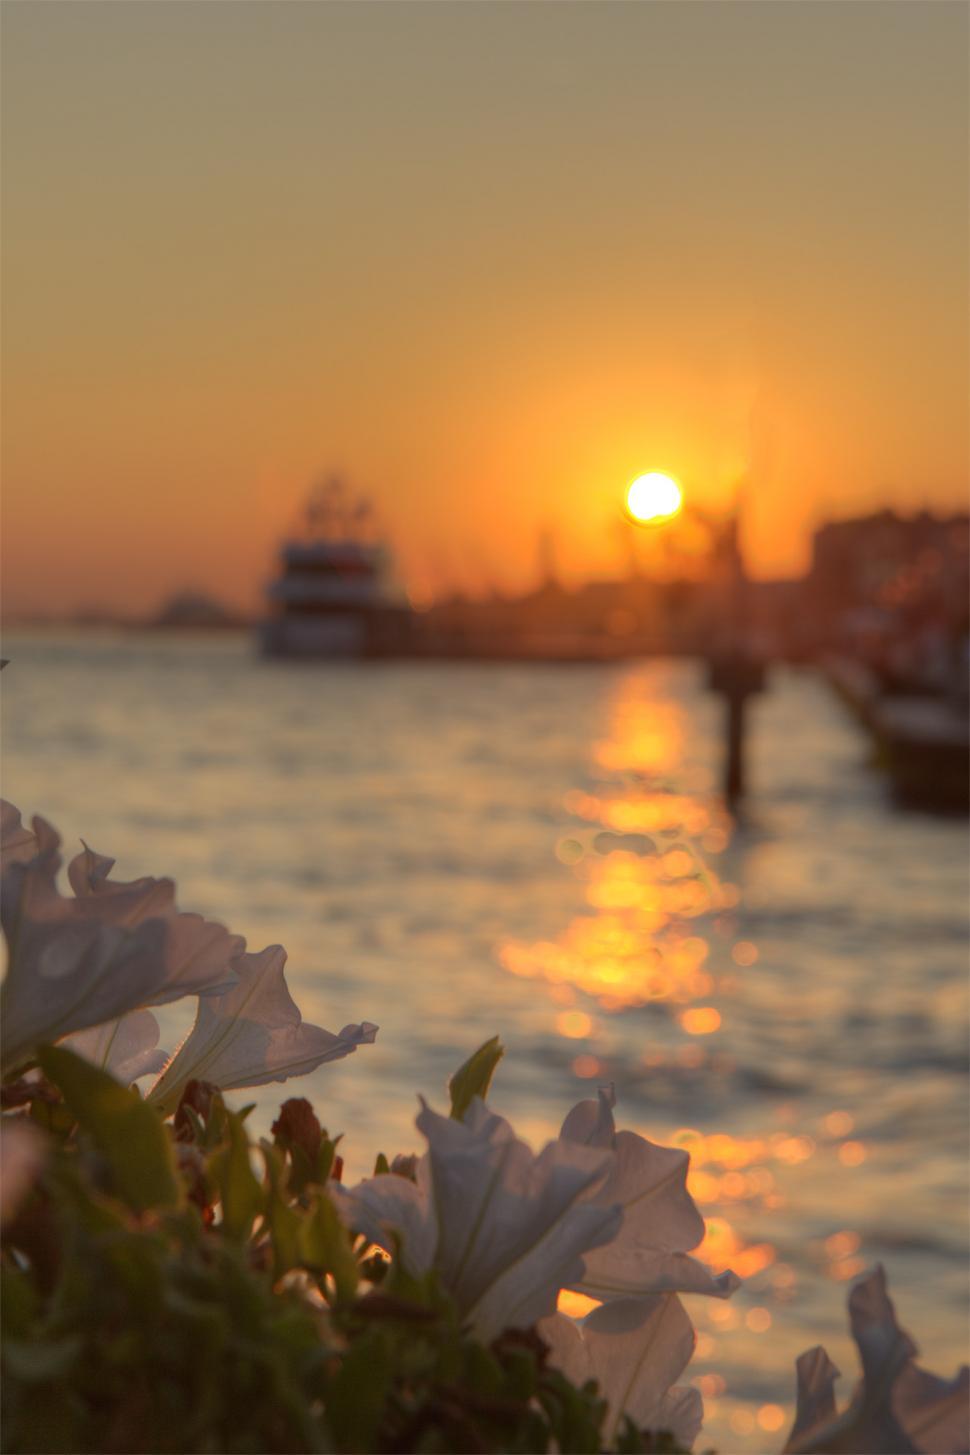 Free Image of Venice Sunset. 